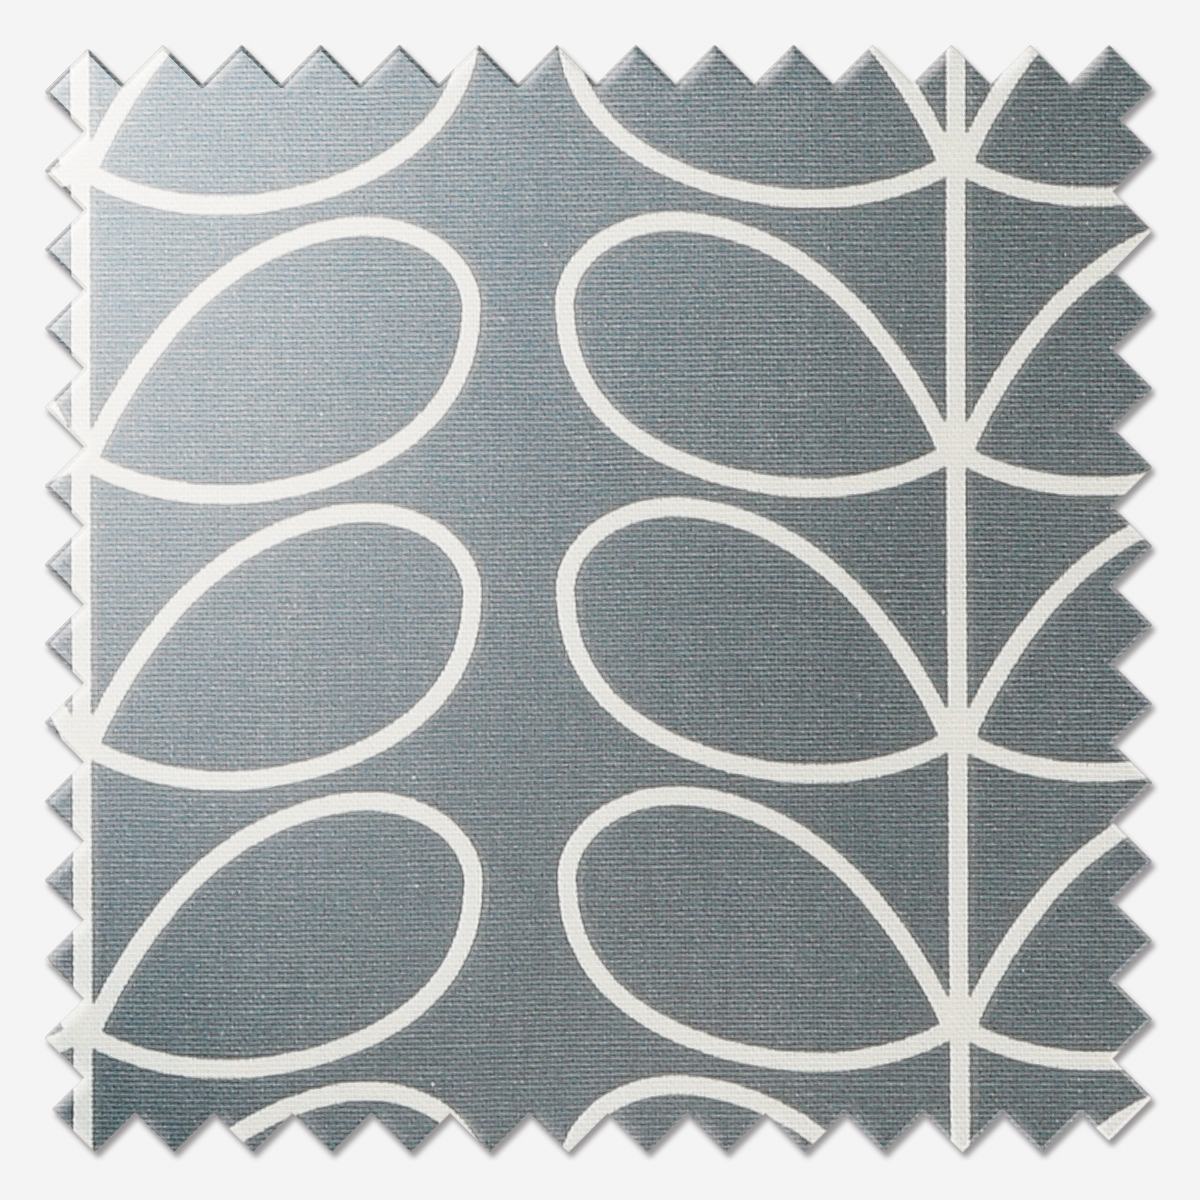 Handmade Lampshade In Orla Kiely Linear Stem Cool Grey Fabric Retro Petals 